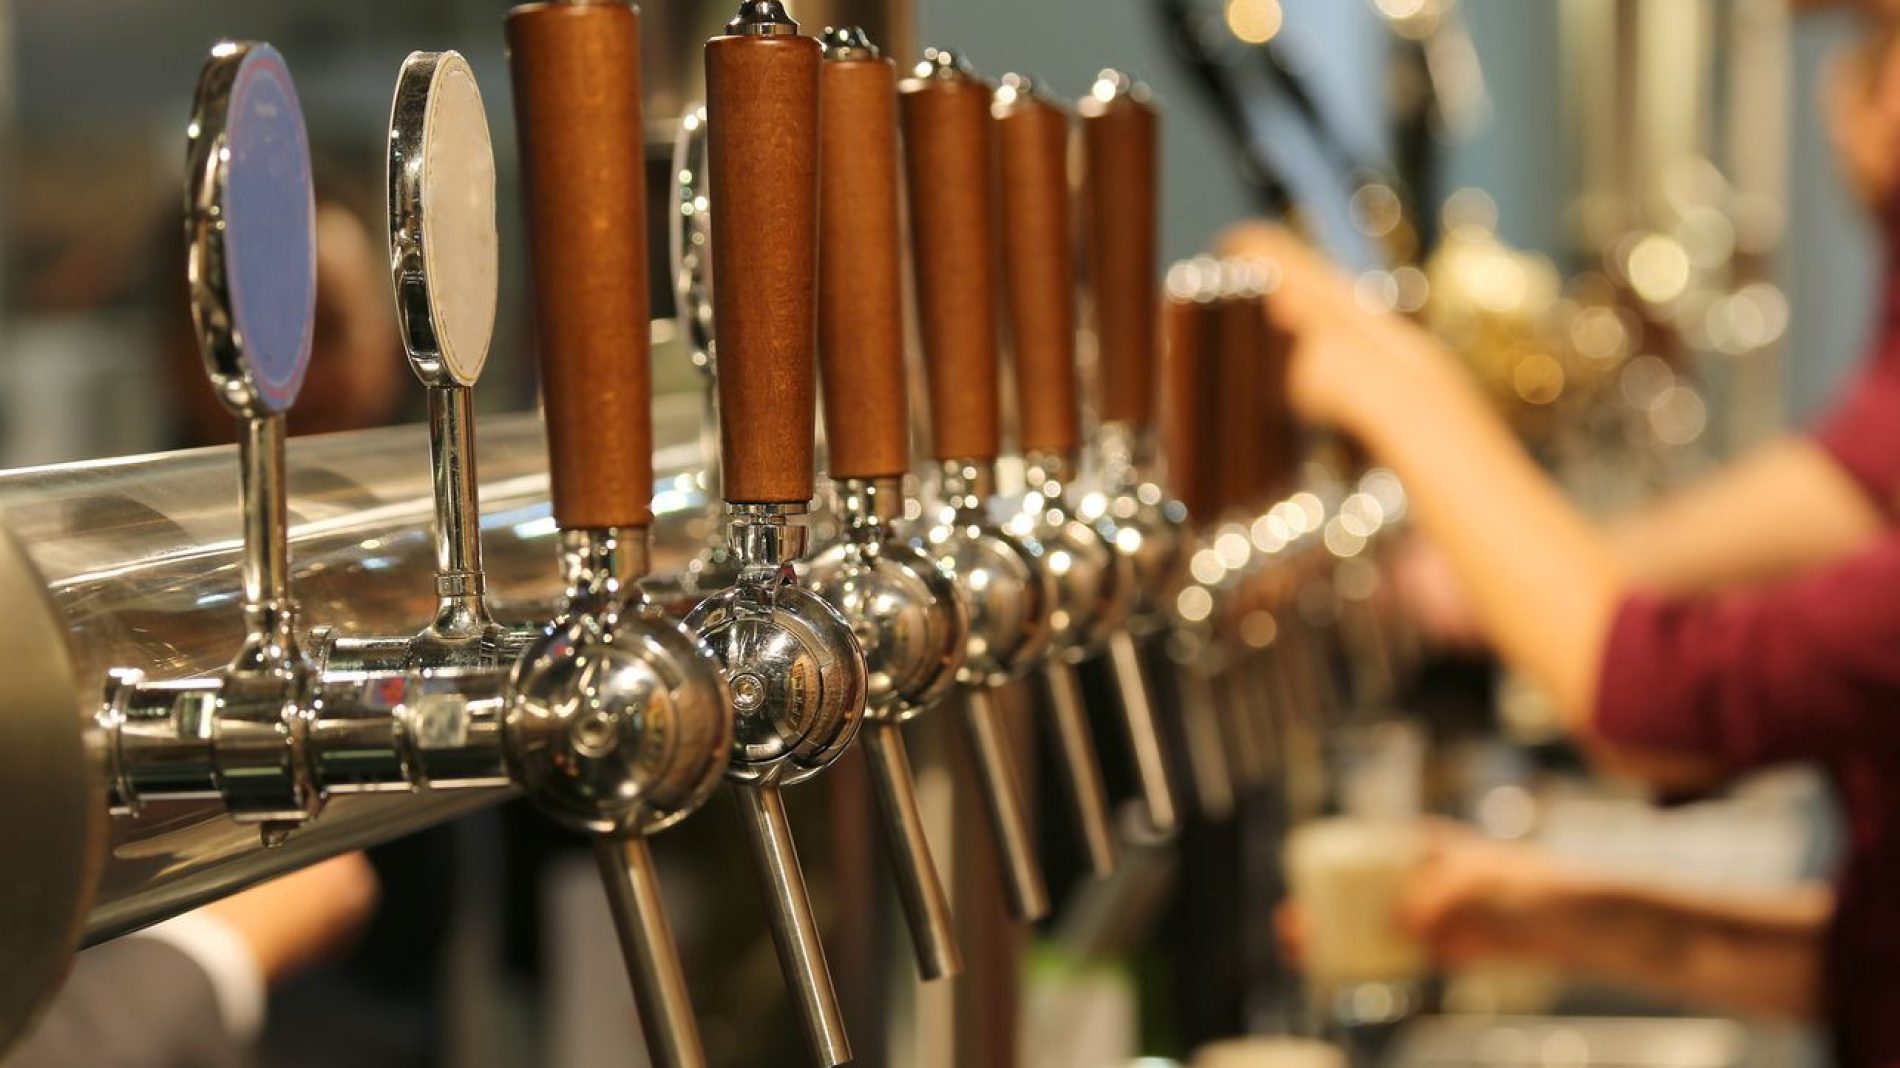 beer-taps-in-bar-binge-drinking